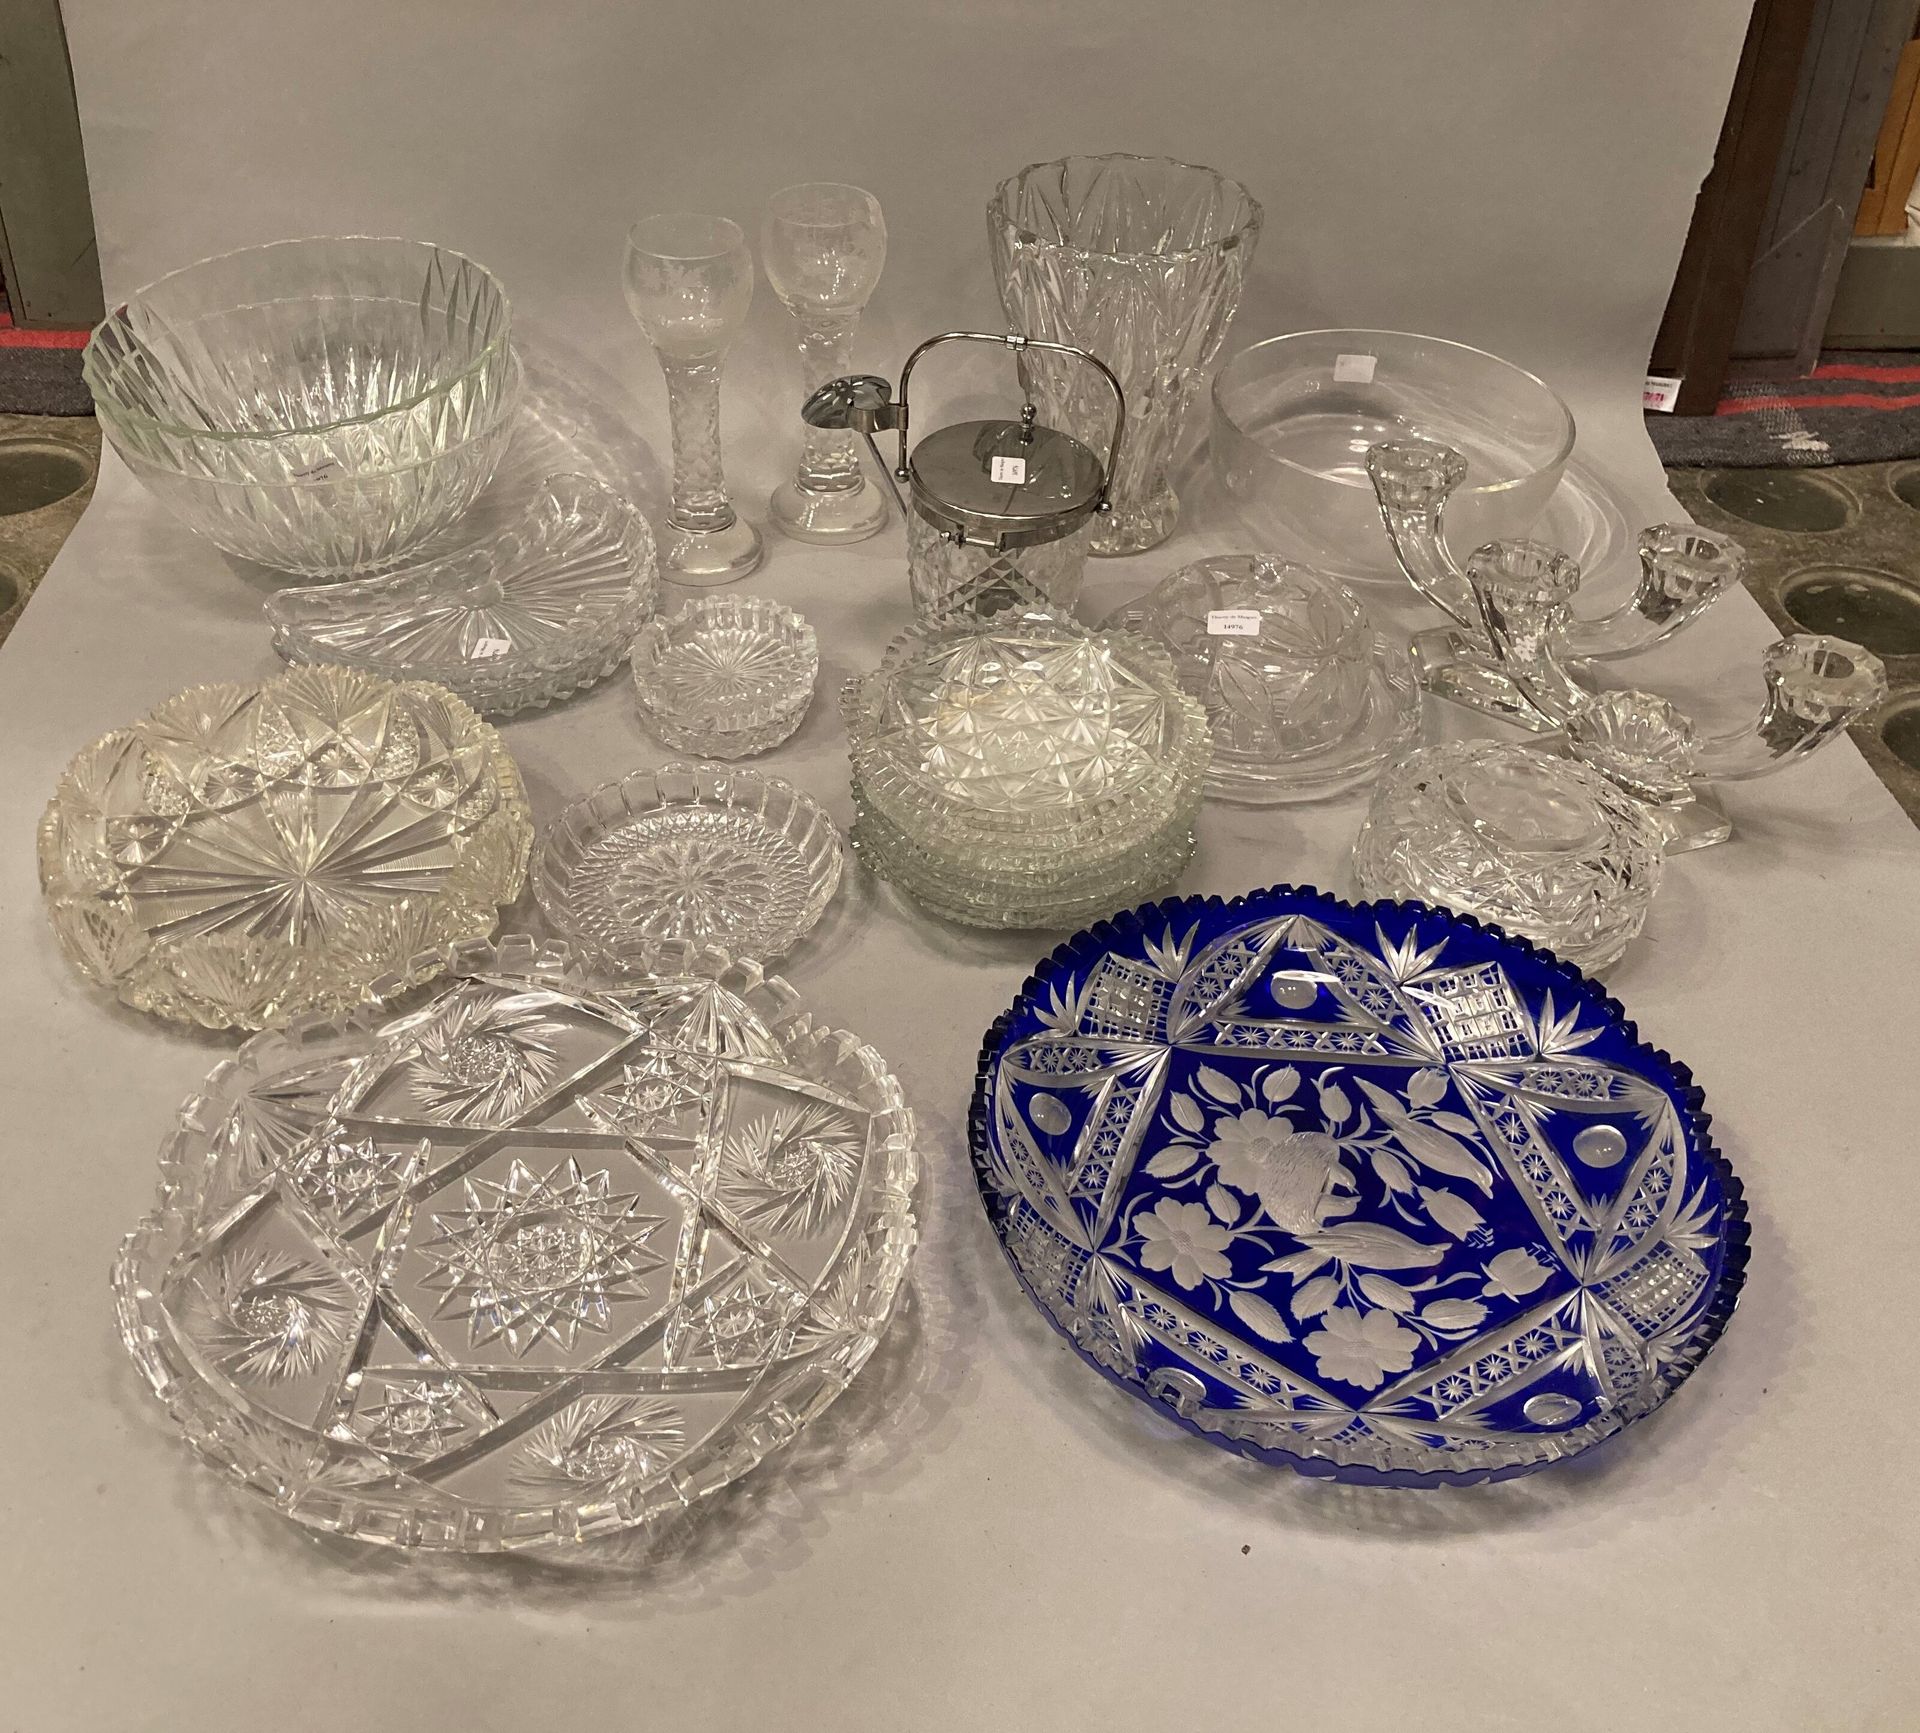 Null 大量玻璃器皿，包括碗、沙拉碗、刻有狩猎主题的玻璃杯、花瓶、一对Val Saint Lambert烛台、糖果和黄油盘等。

意外和碎片

原样出售